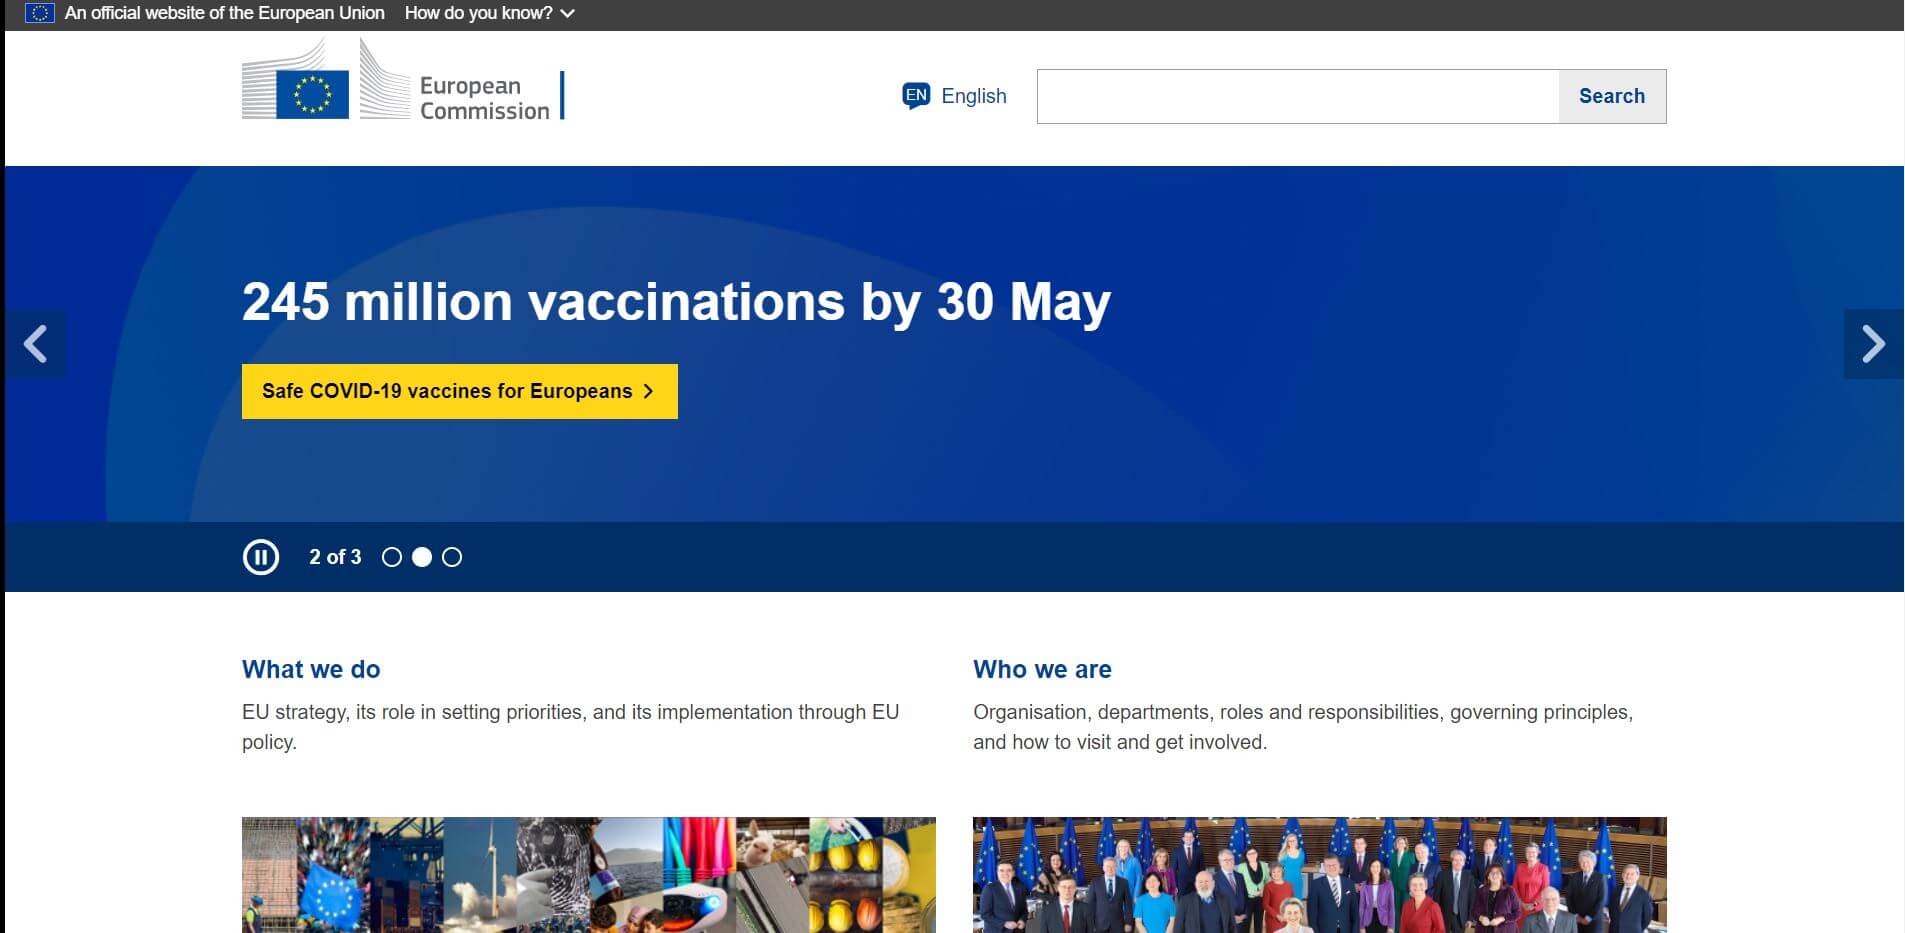 The European Commission's website on Drupal